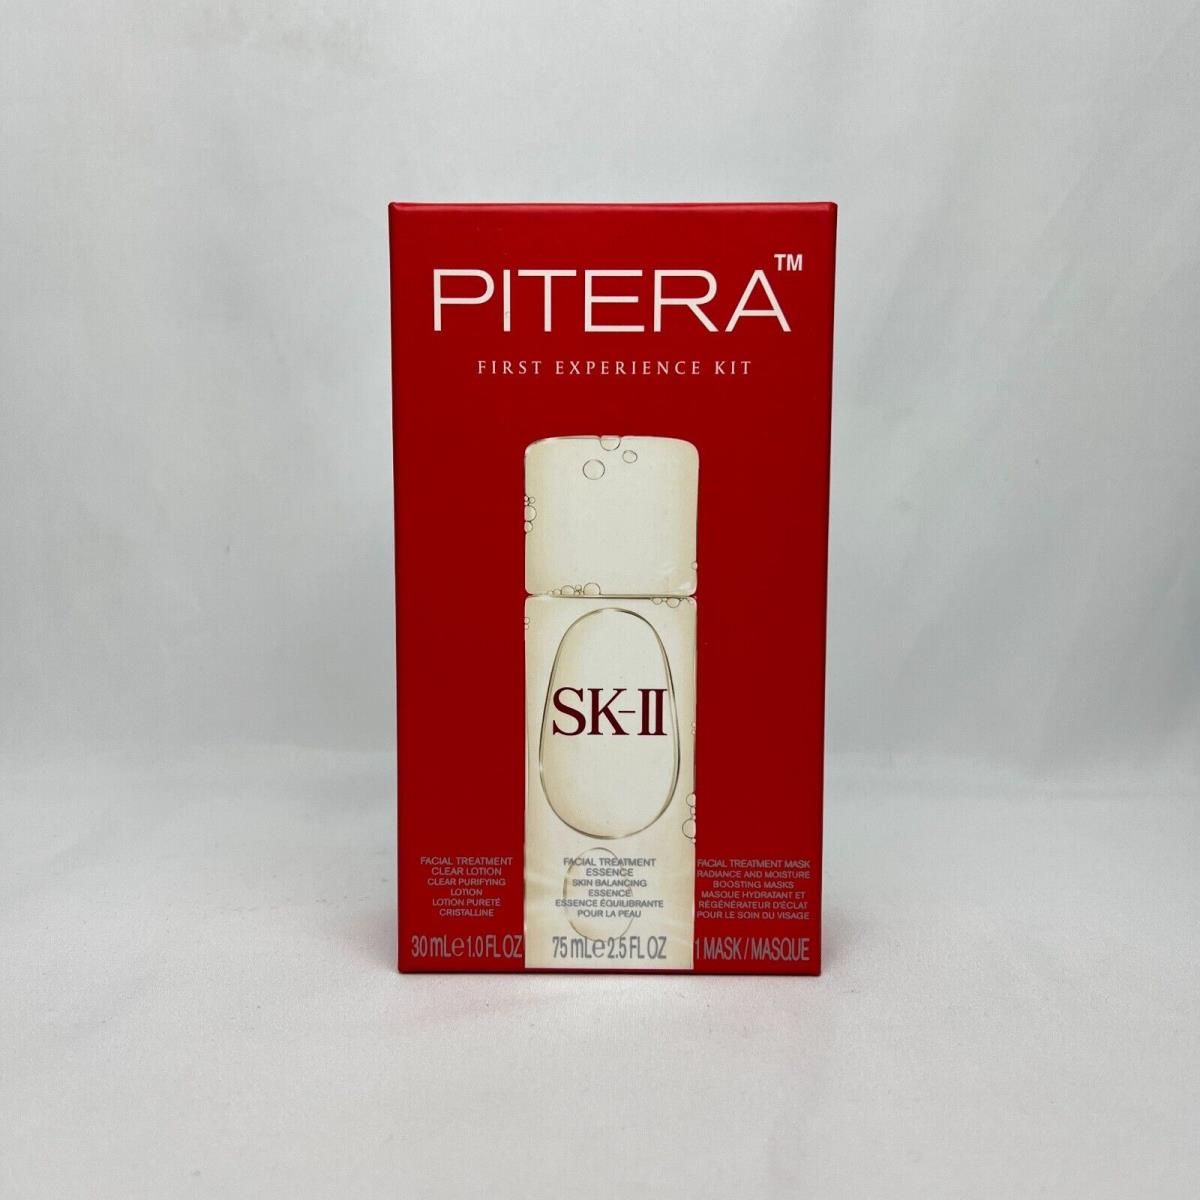 Sk-ii Pitera First Experience Kit 3 Piece Kit